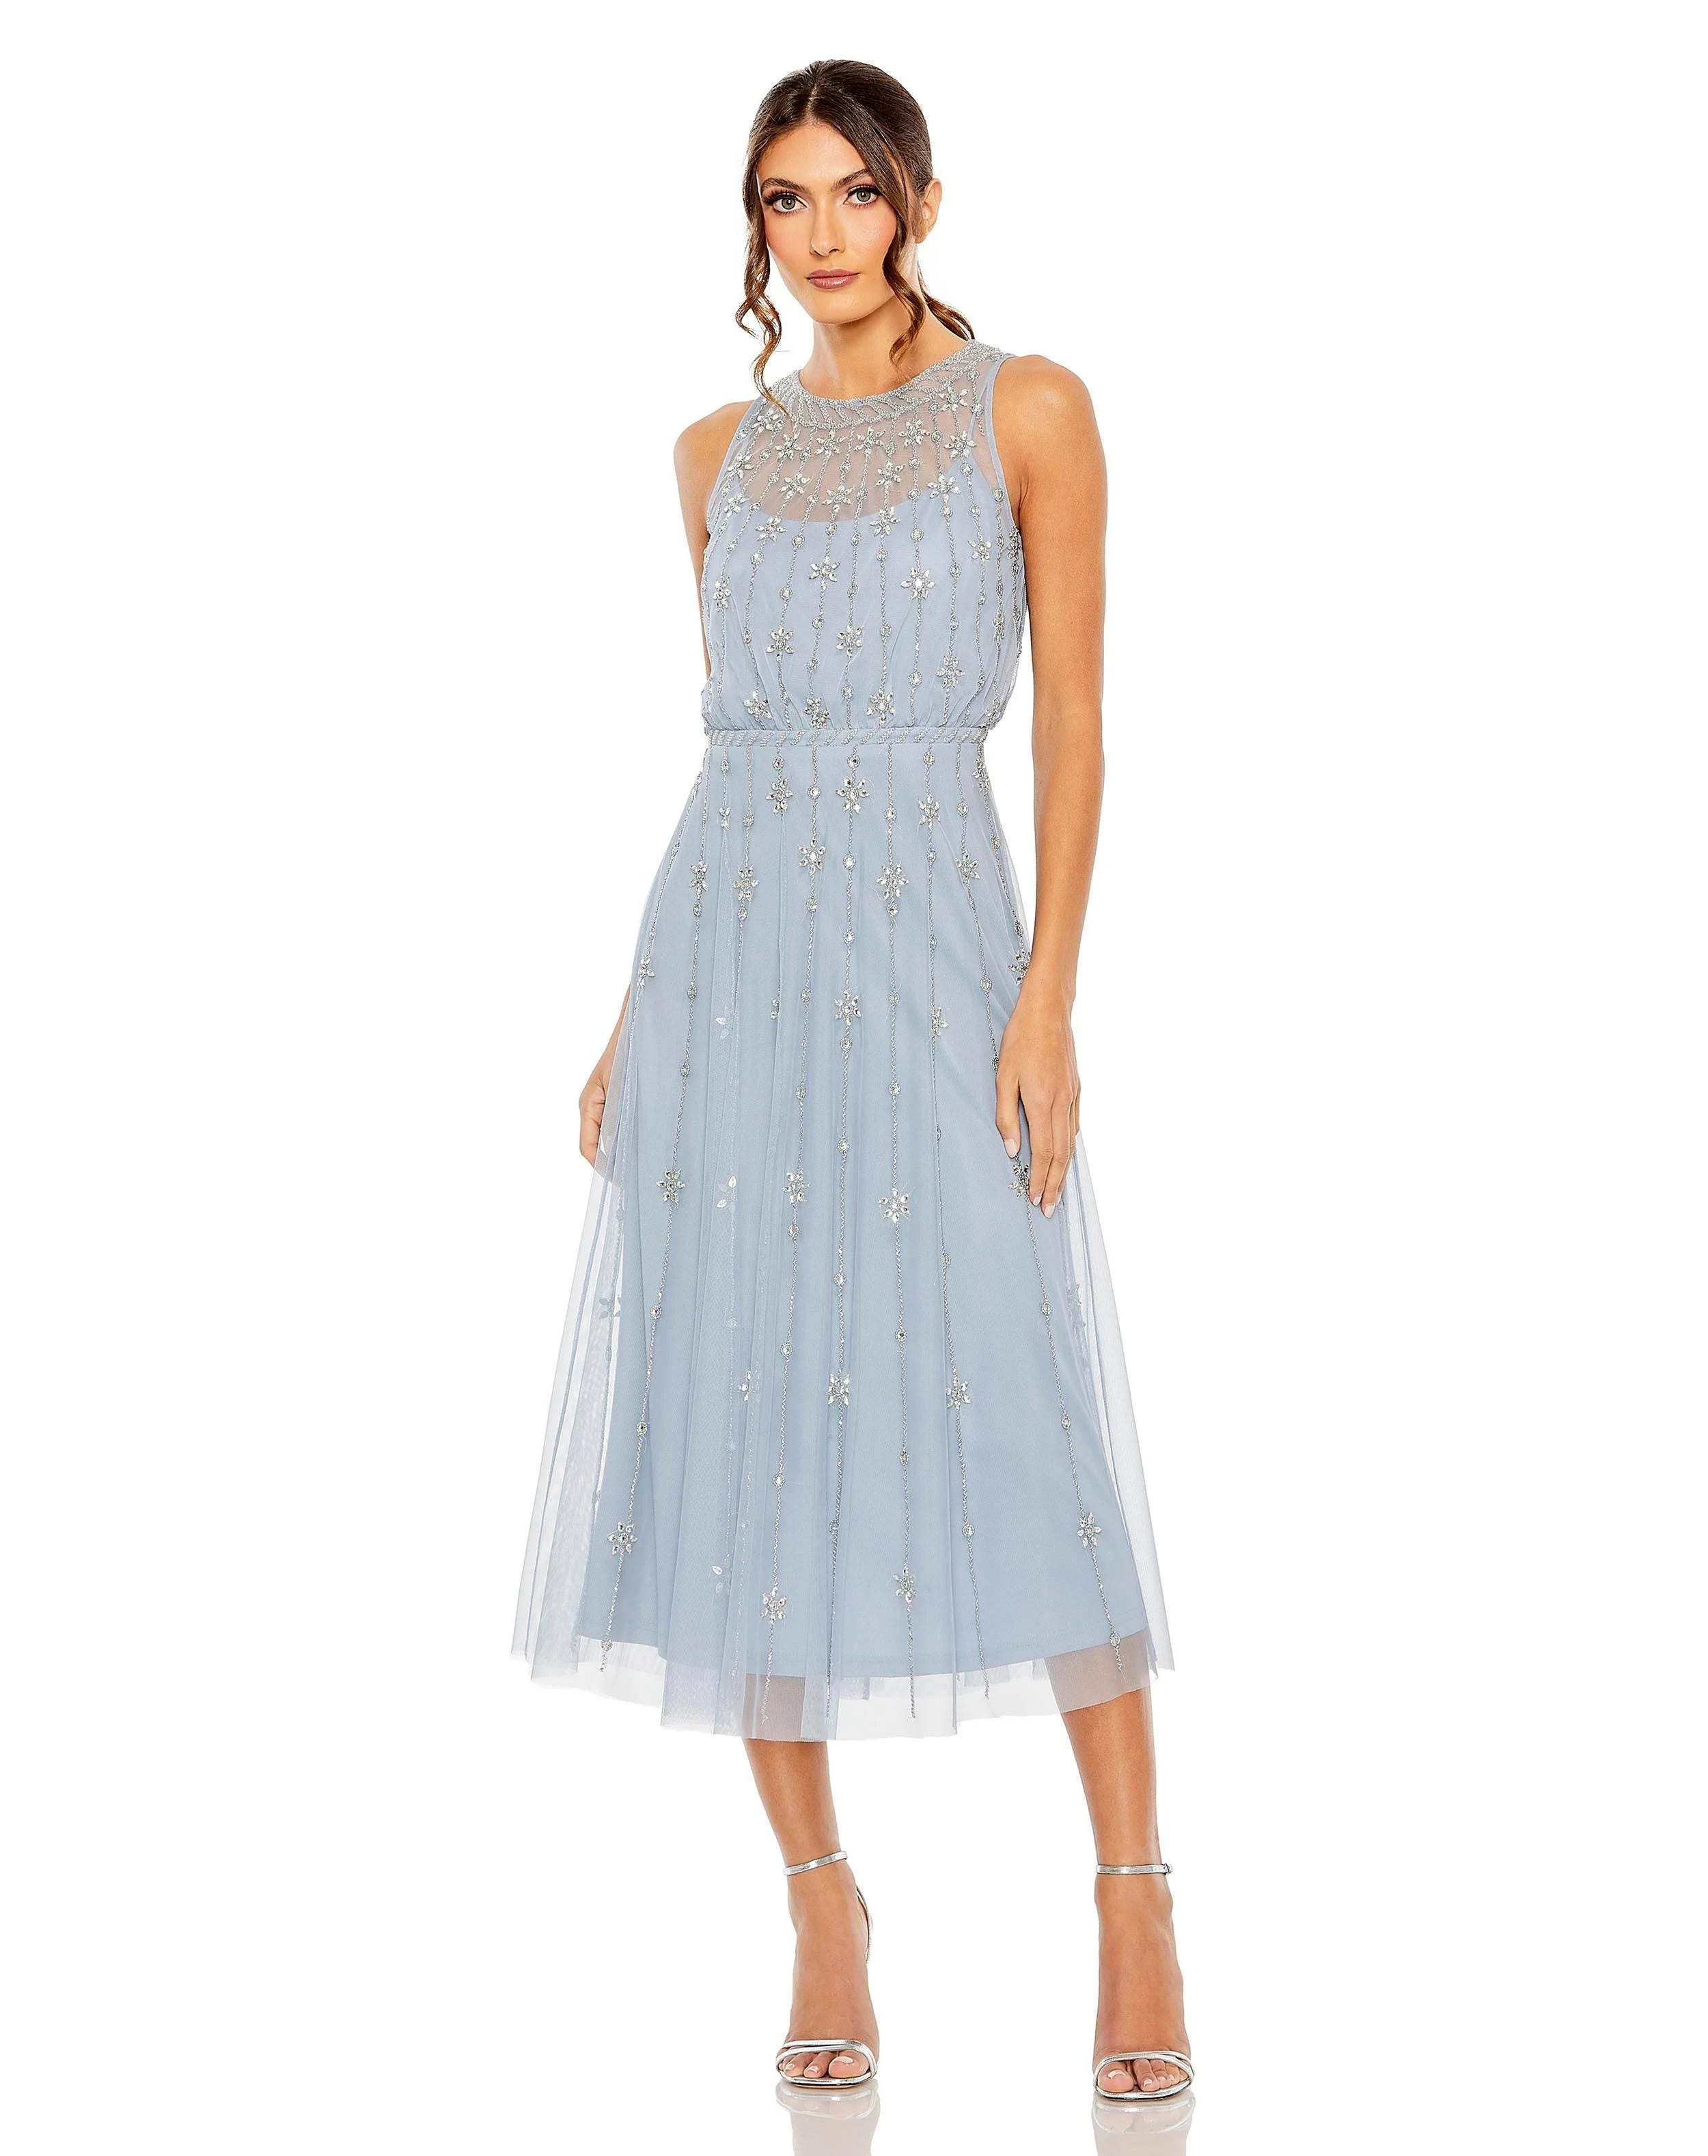 Powder Blue Crystal-Embellished Midi Dress by Mac Duggal | Image